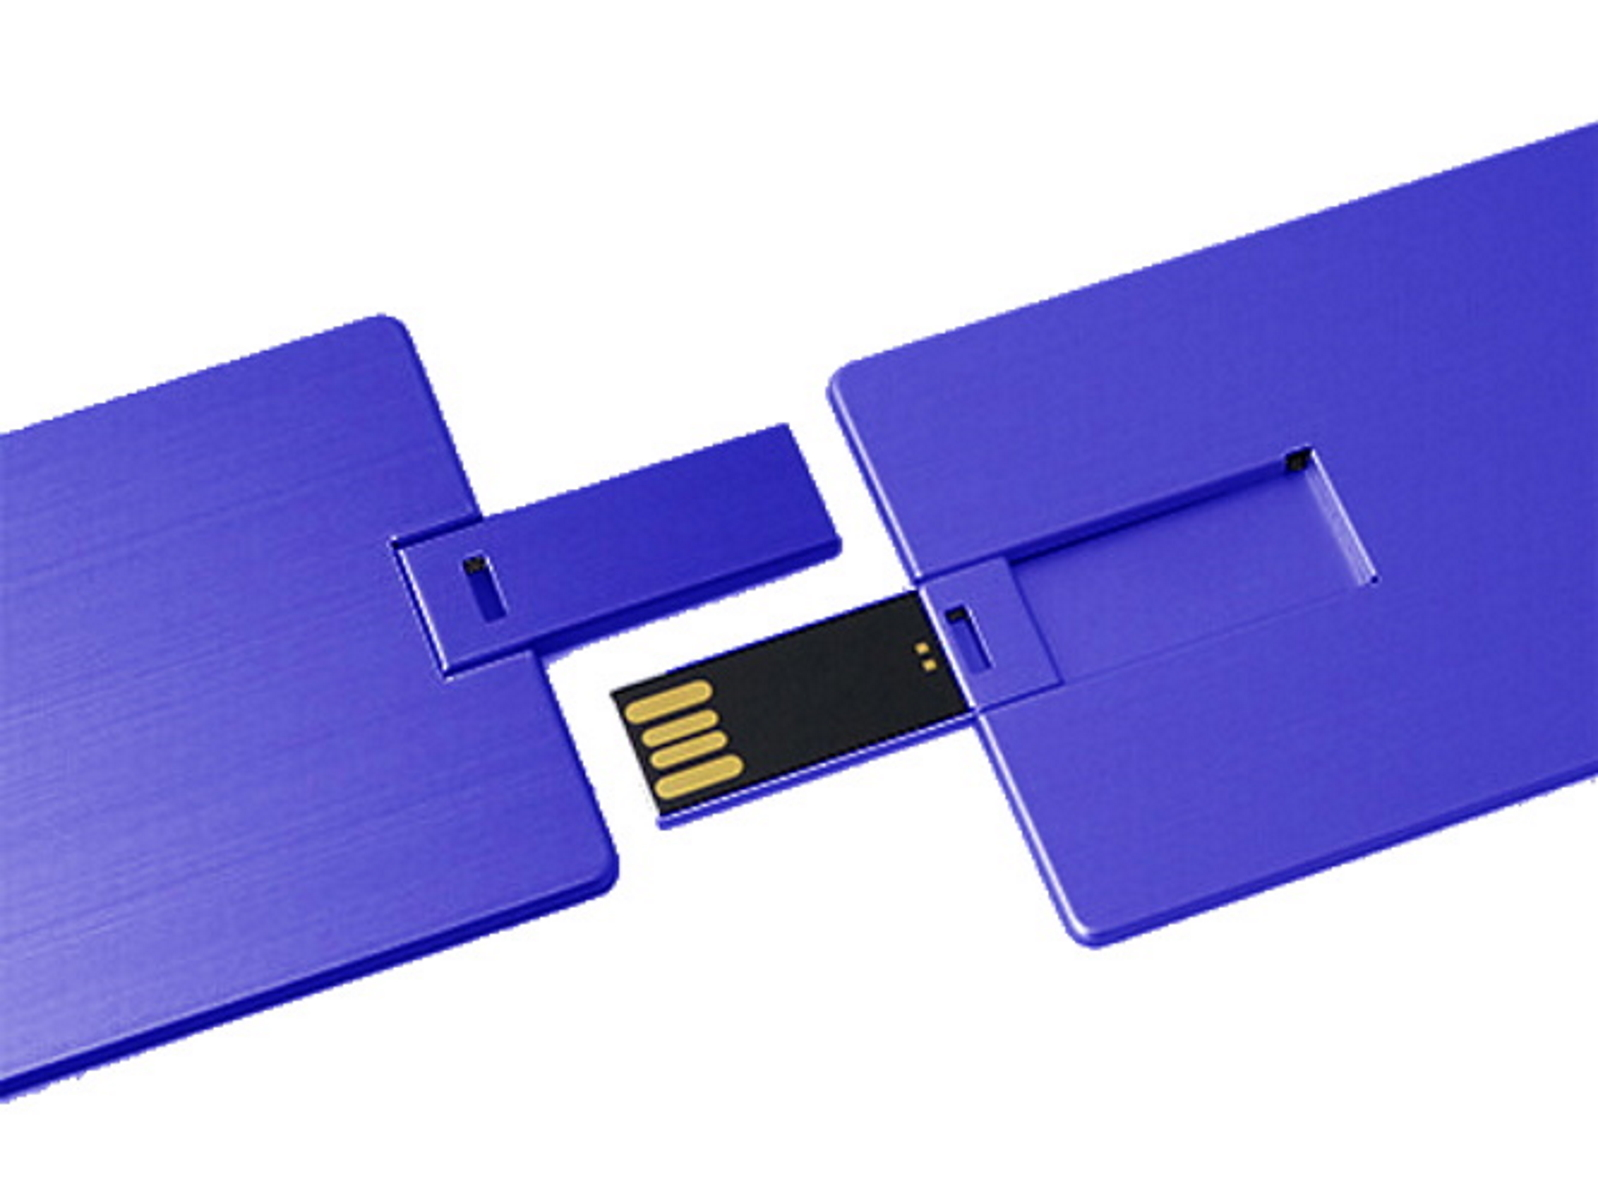 USB GERMANY GB) Metall-Kreditkarte (Blau, 8 USB-Stick ®